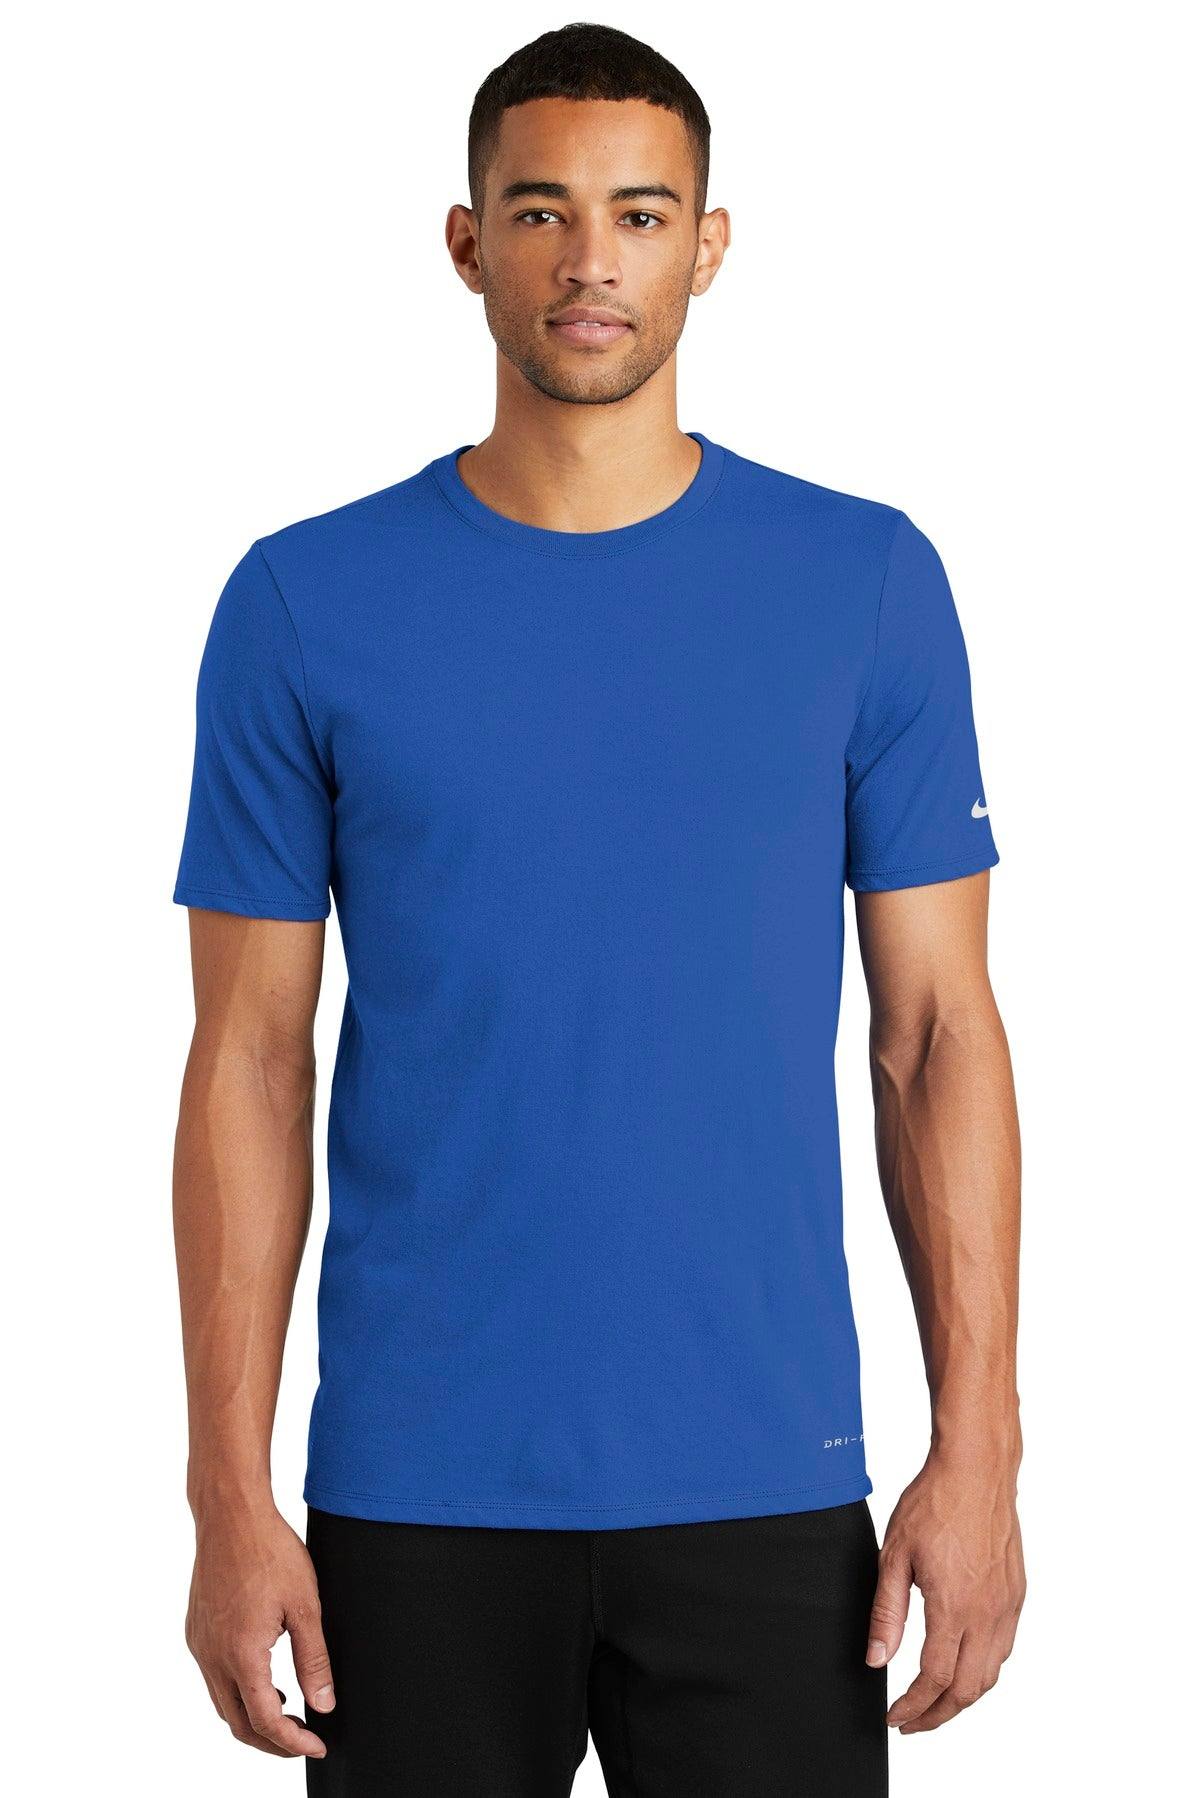 Design Custom Printed Nike Dri-FIT Cotton/Poly T-Shirts NKBQ5231